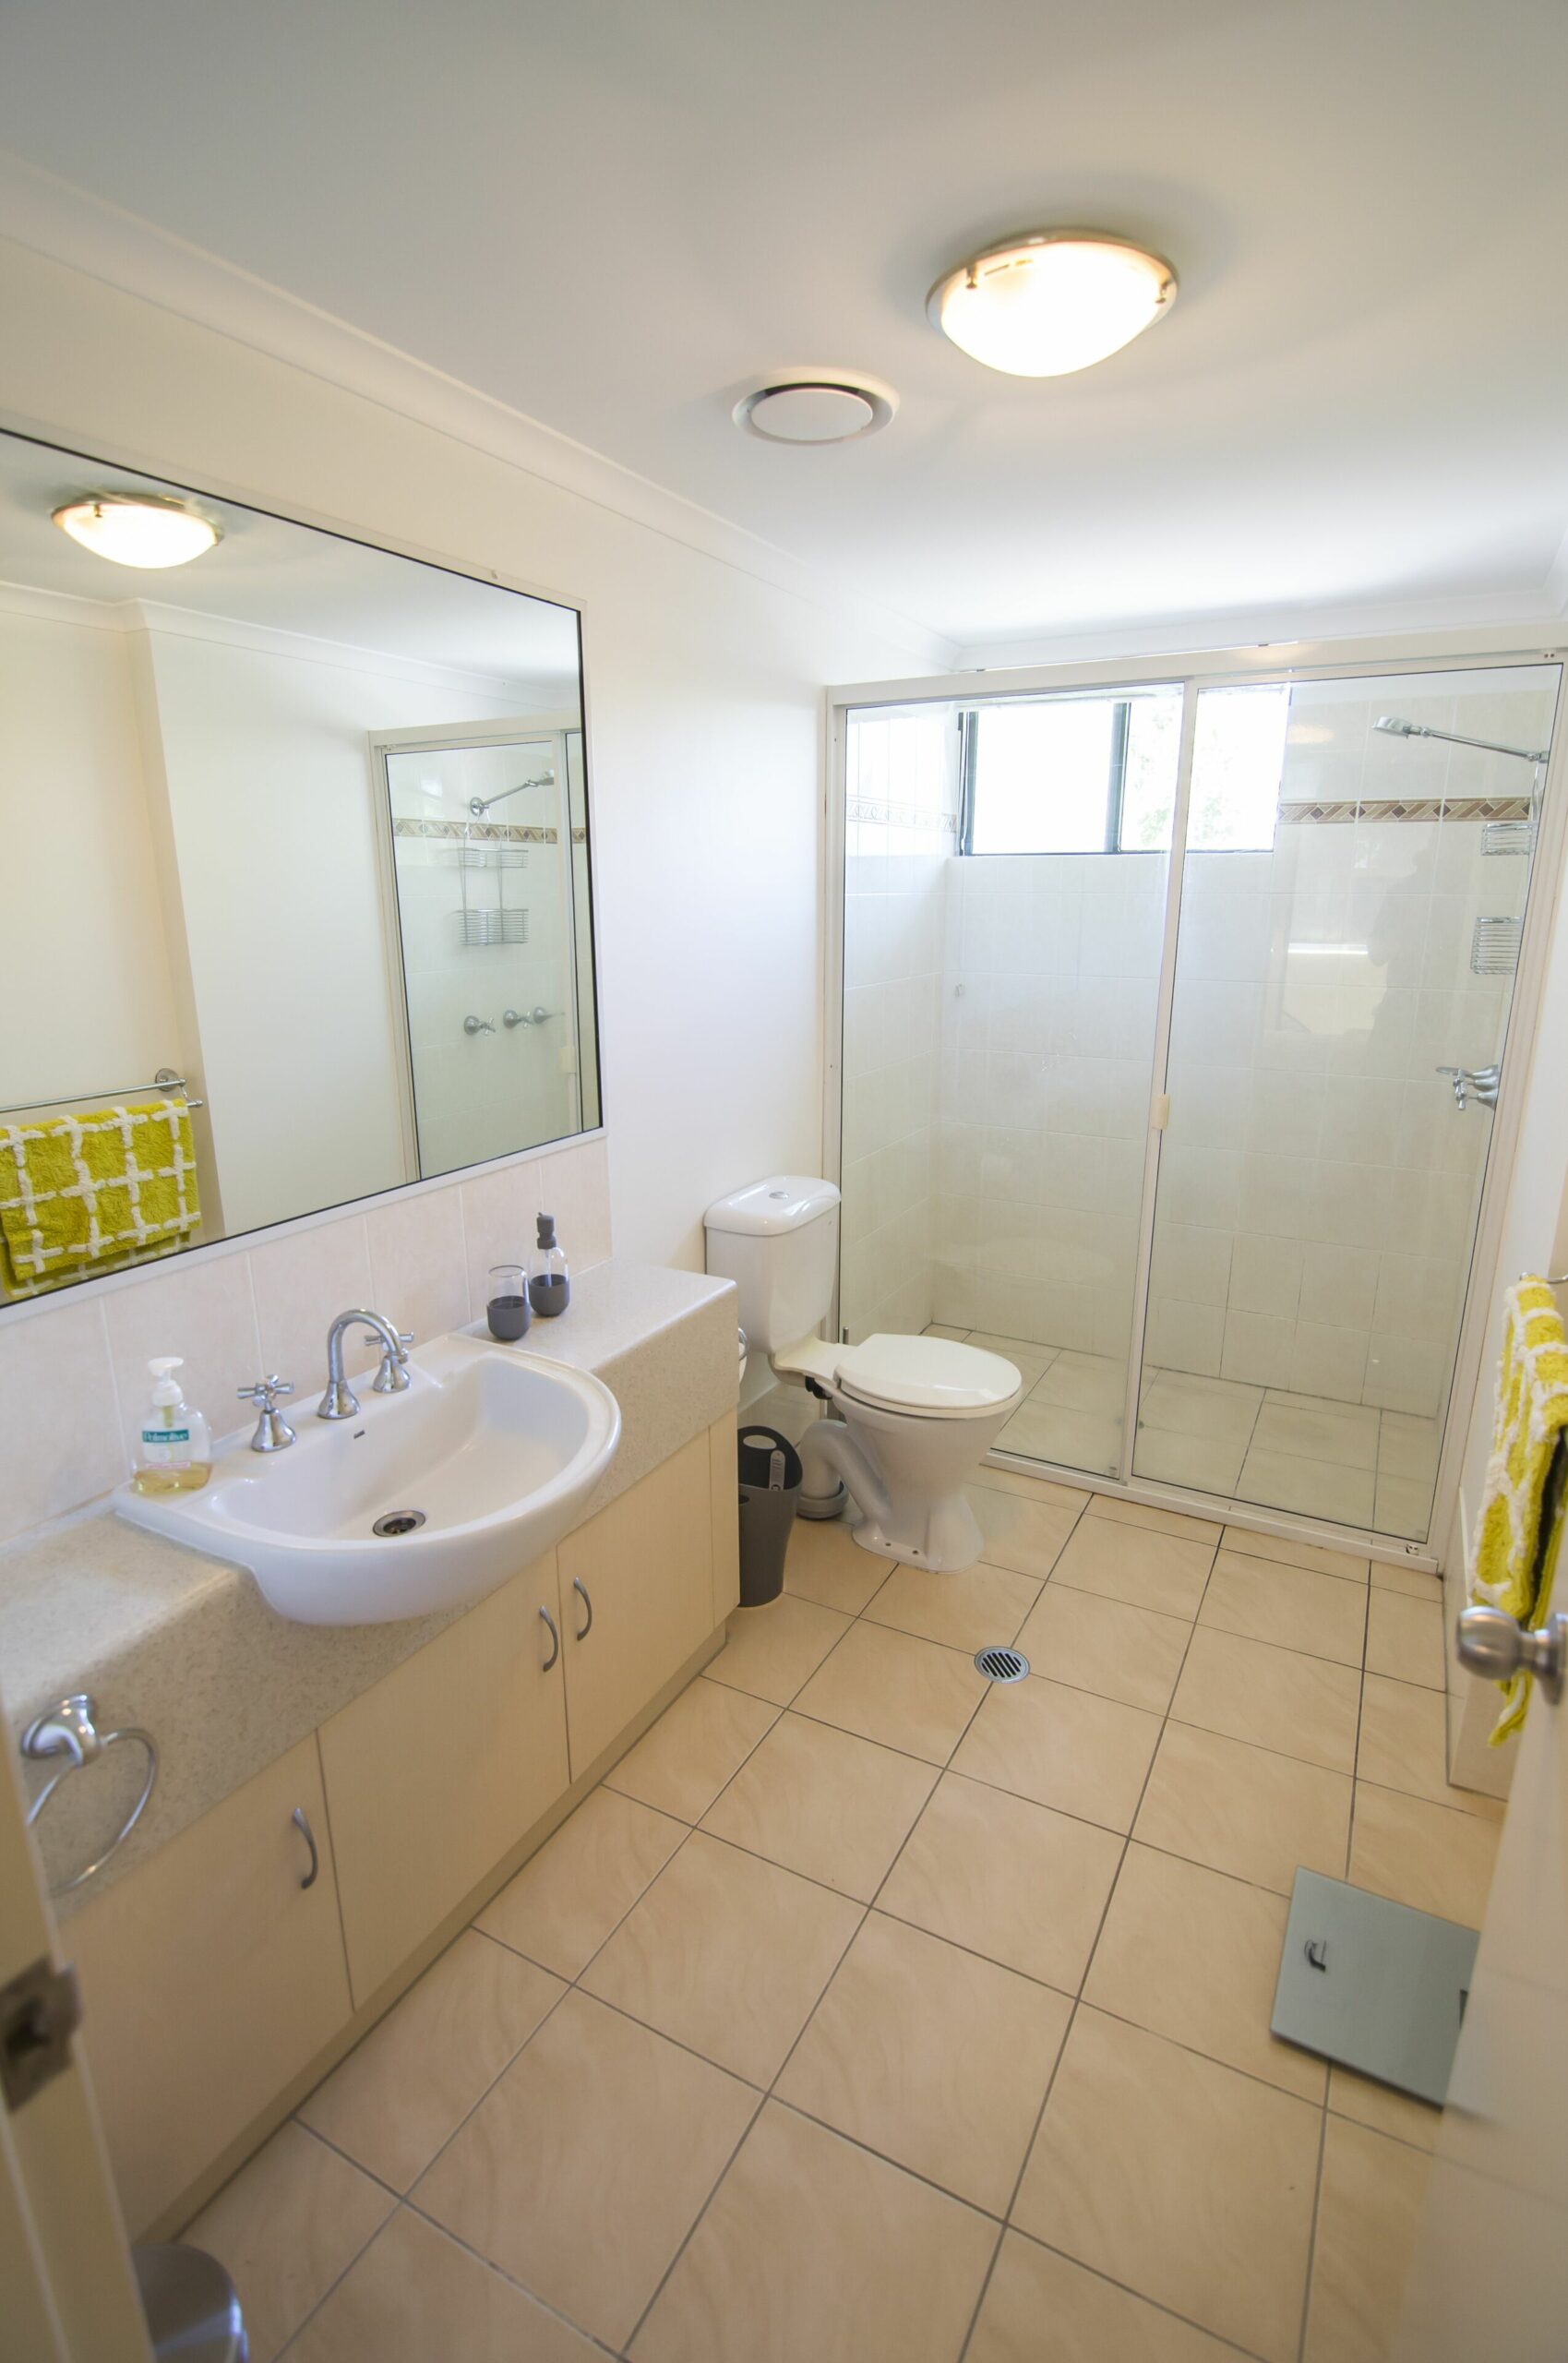 2 Bedroom / 2 Bathroom Apartment / Cairns Central